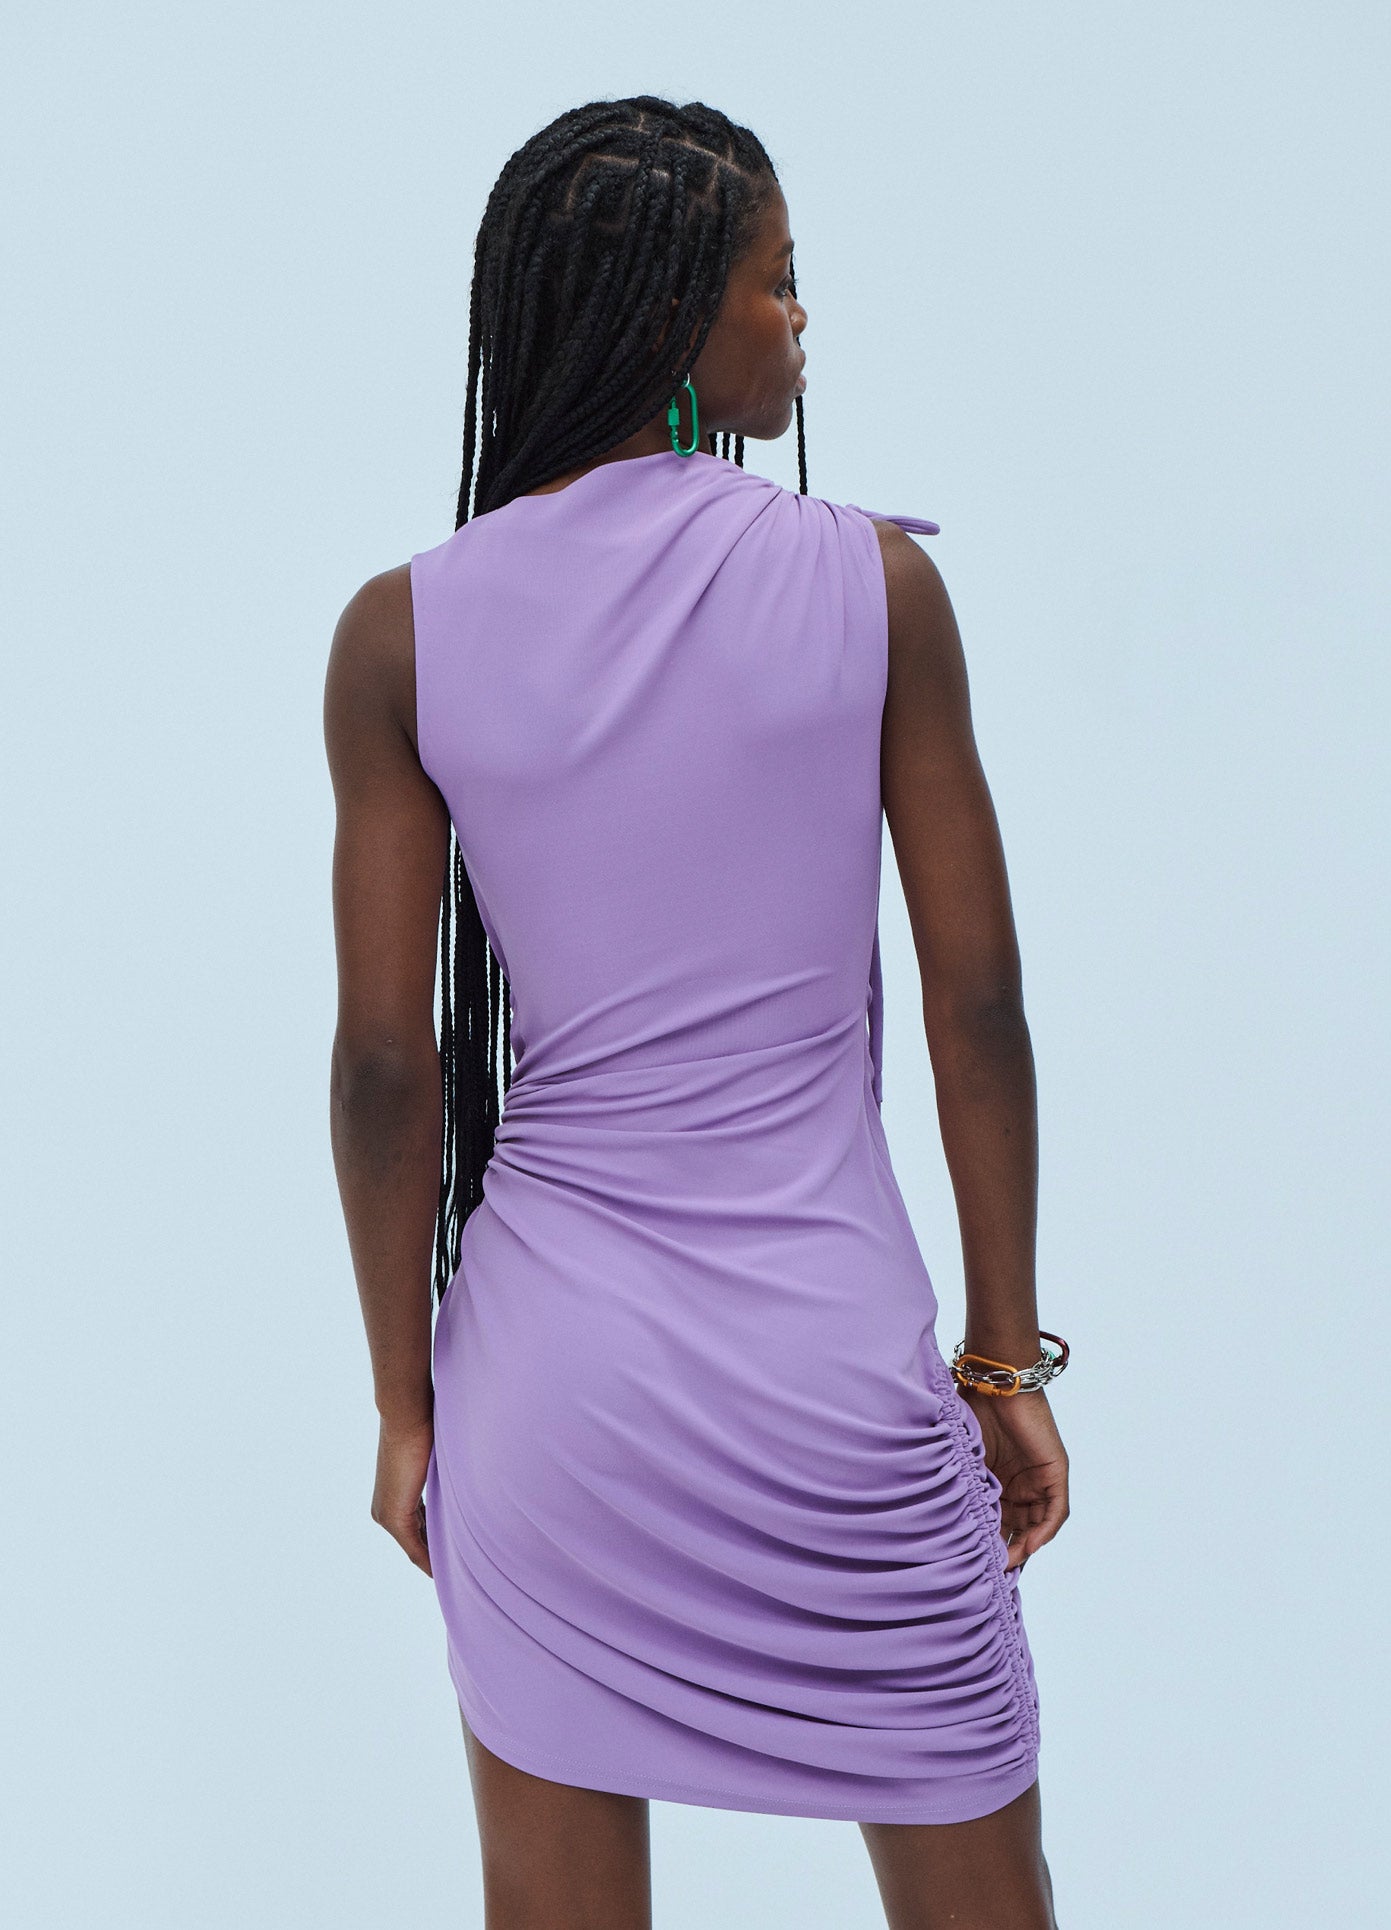 MONSE Sleeveless Keyhole Detail Draped Dress in Lavender on Model Back View